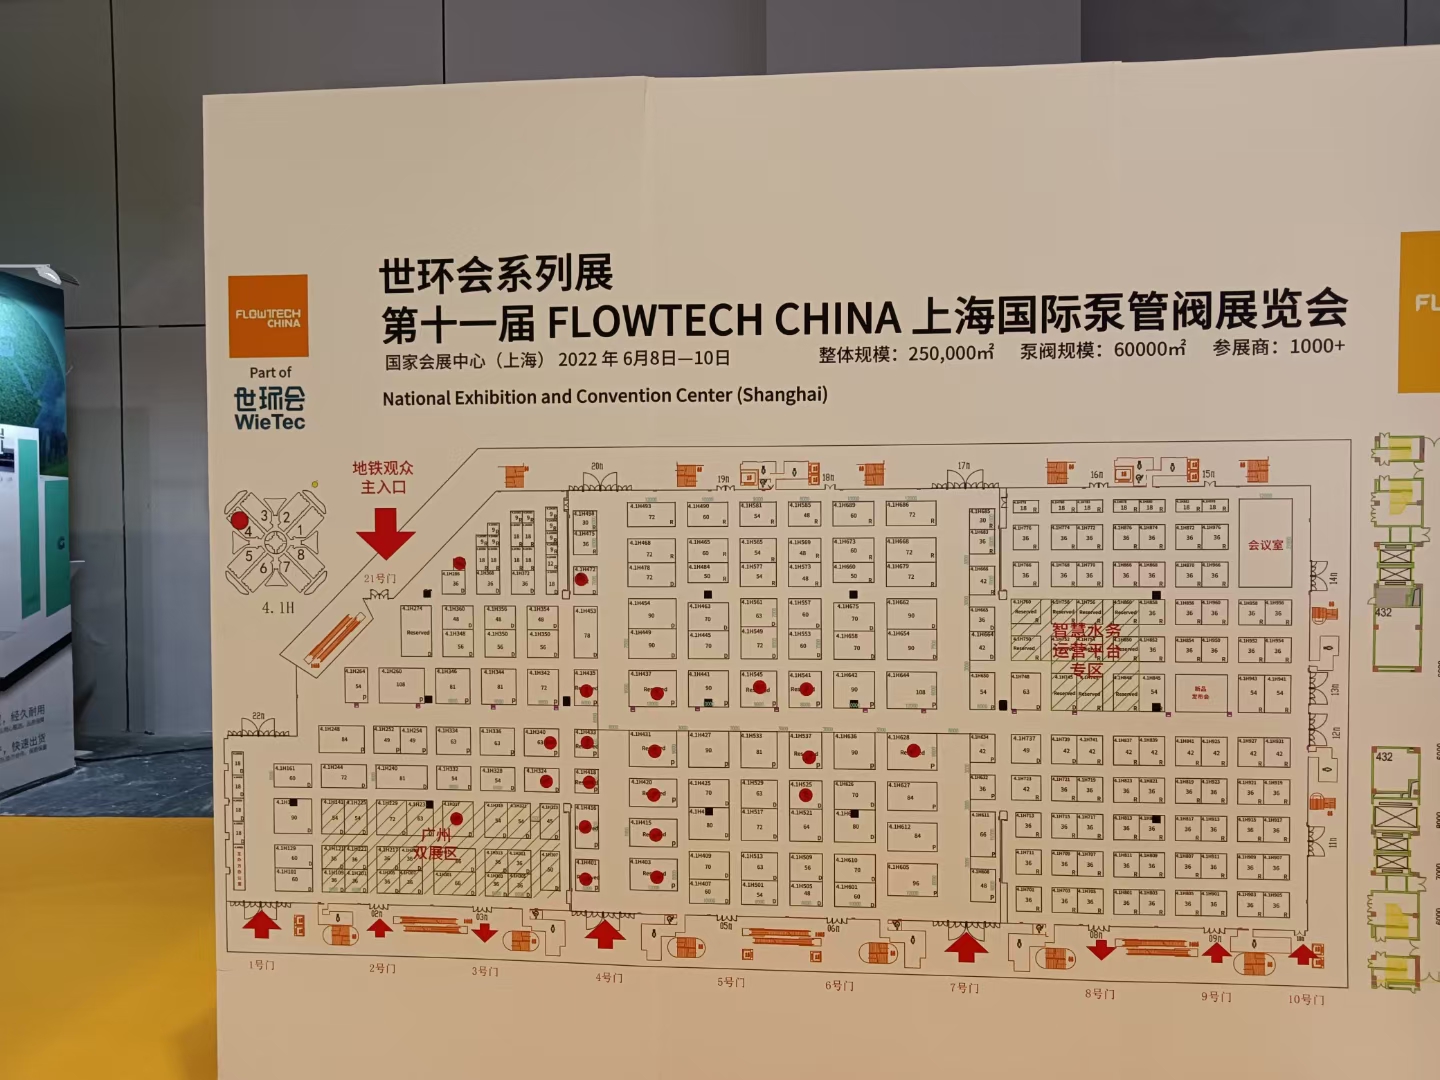 flowtech China in Shanghai